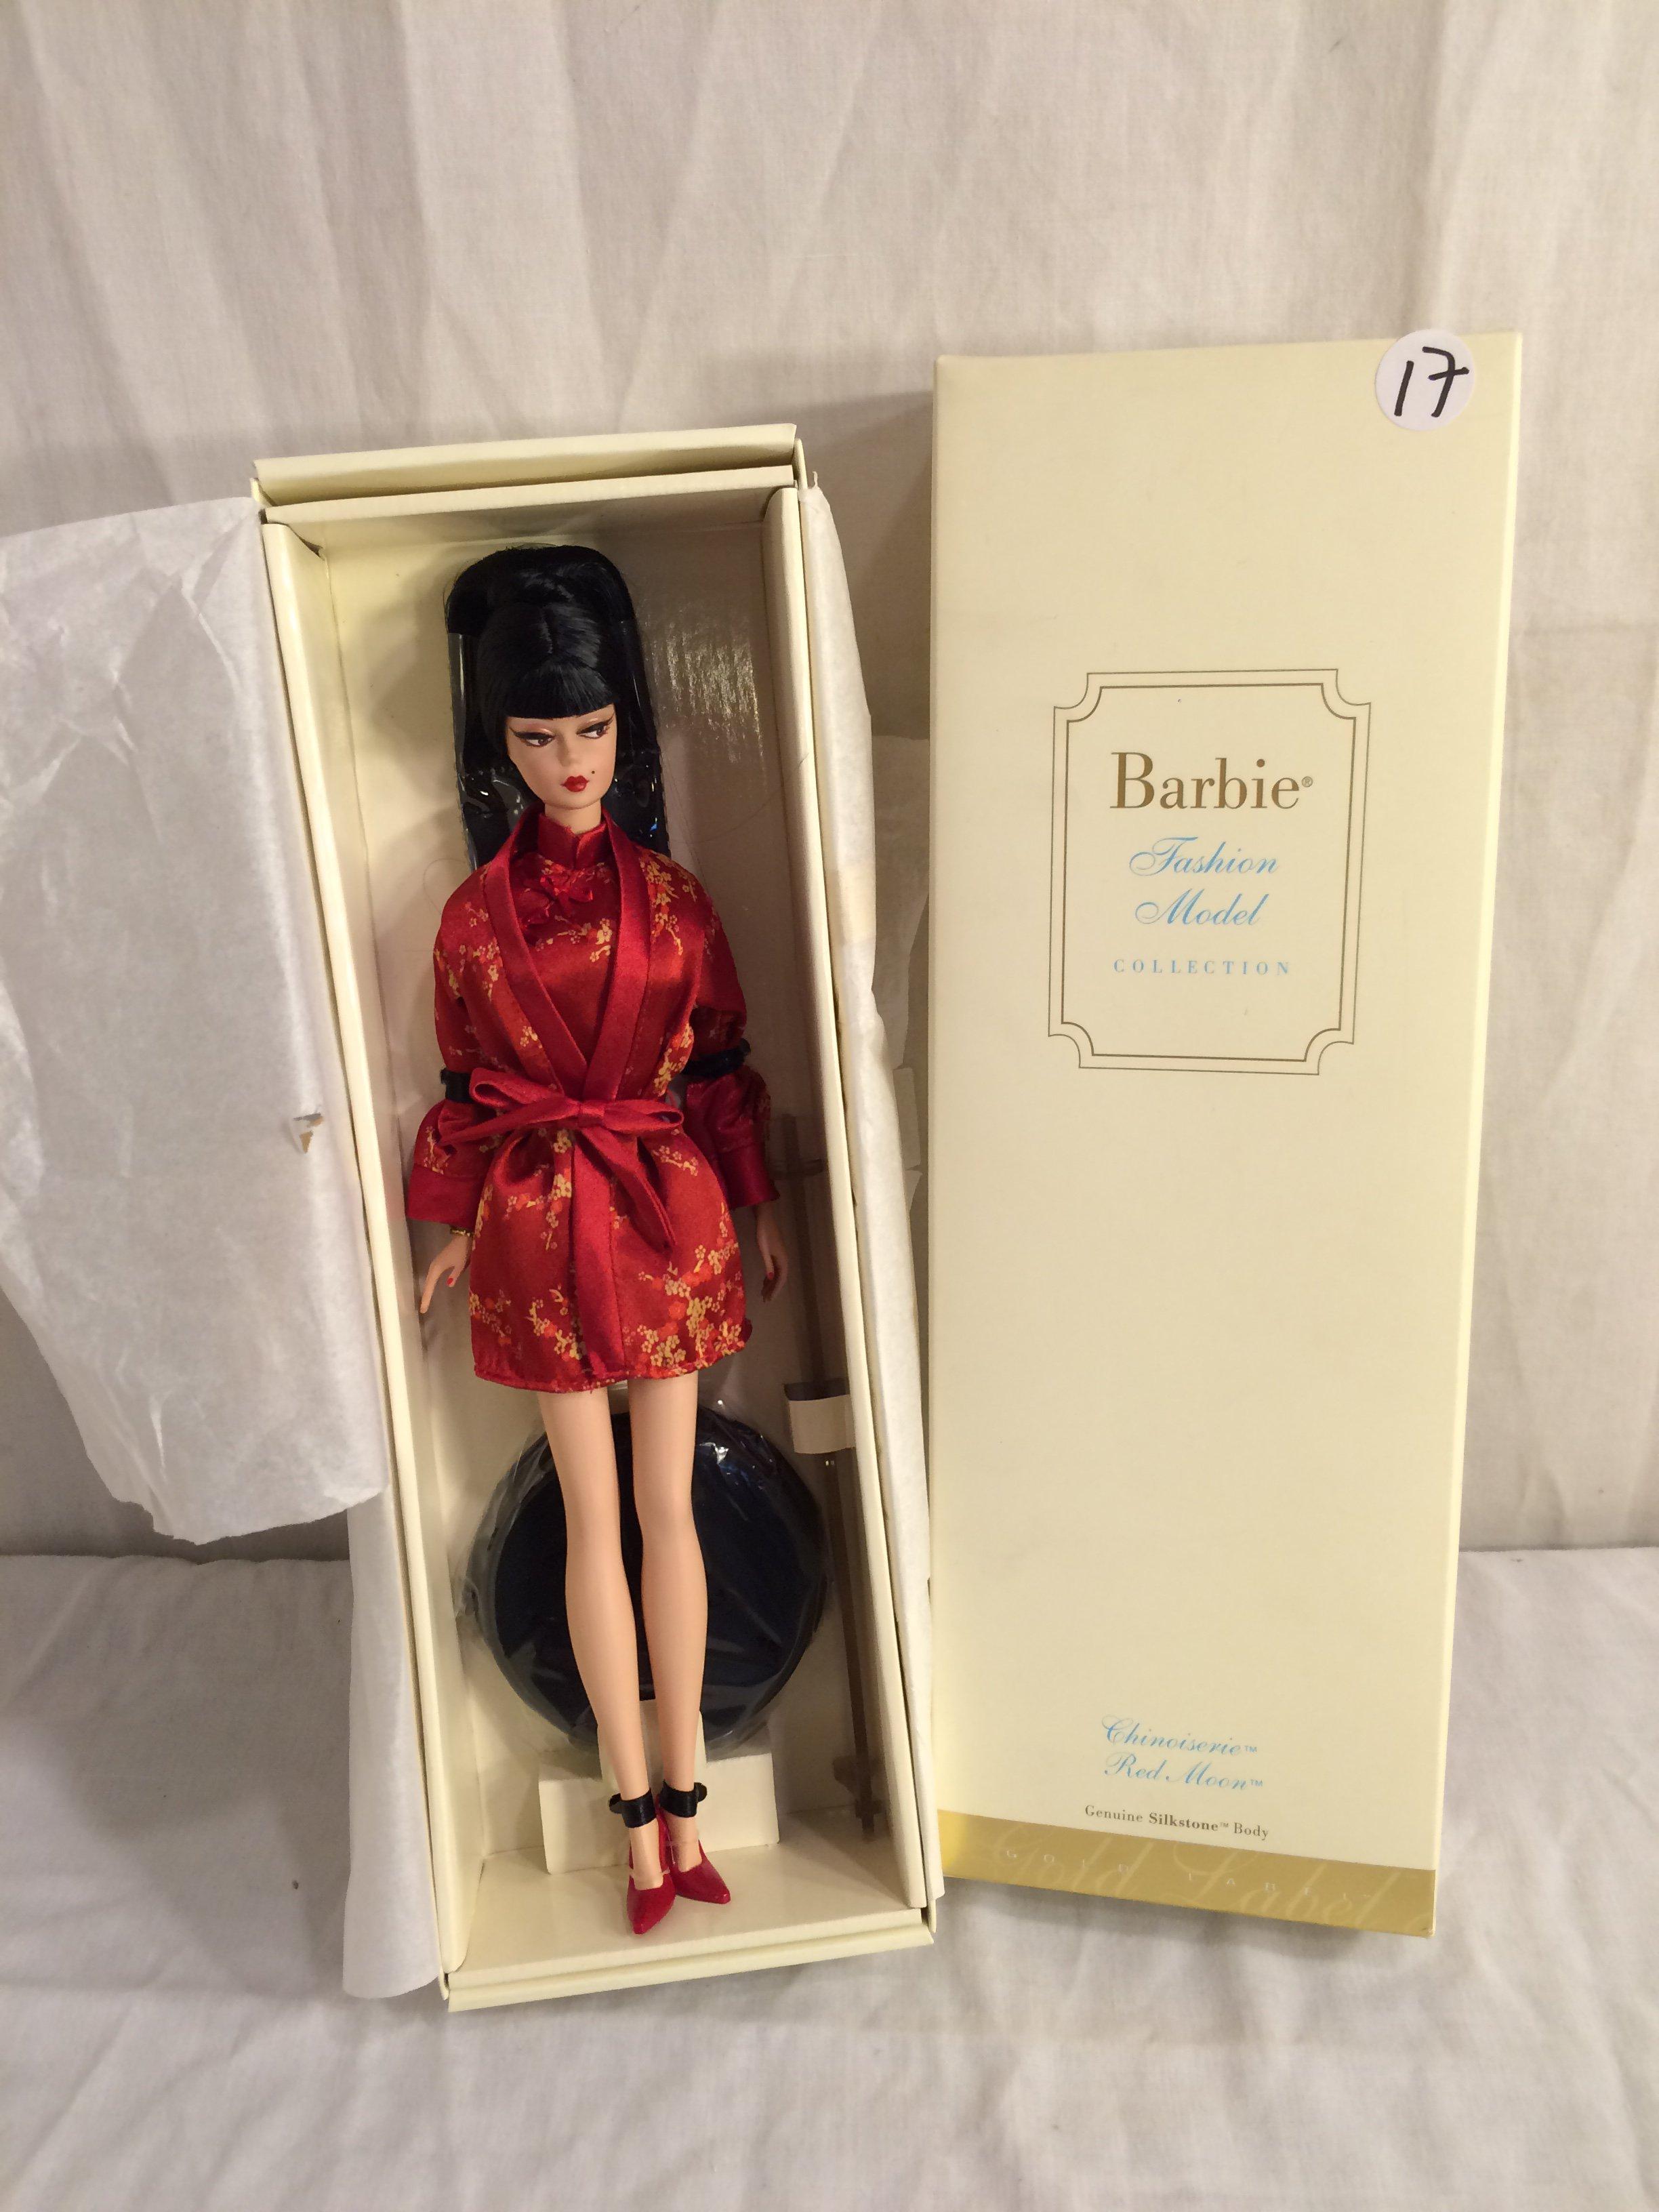 NIB Barbie Genuine Silkstone Body Fashion Model Gold Label Collection "Chinoiserie Red Moon" 13.5"